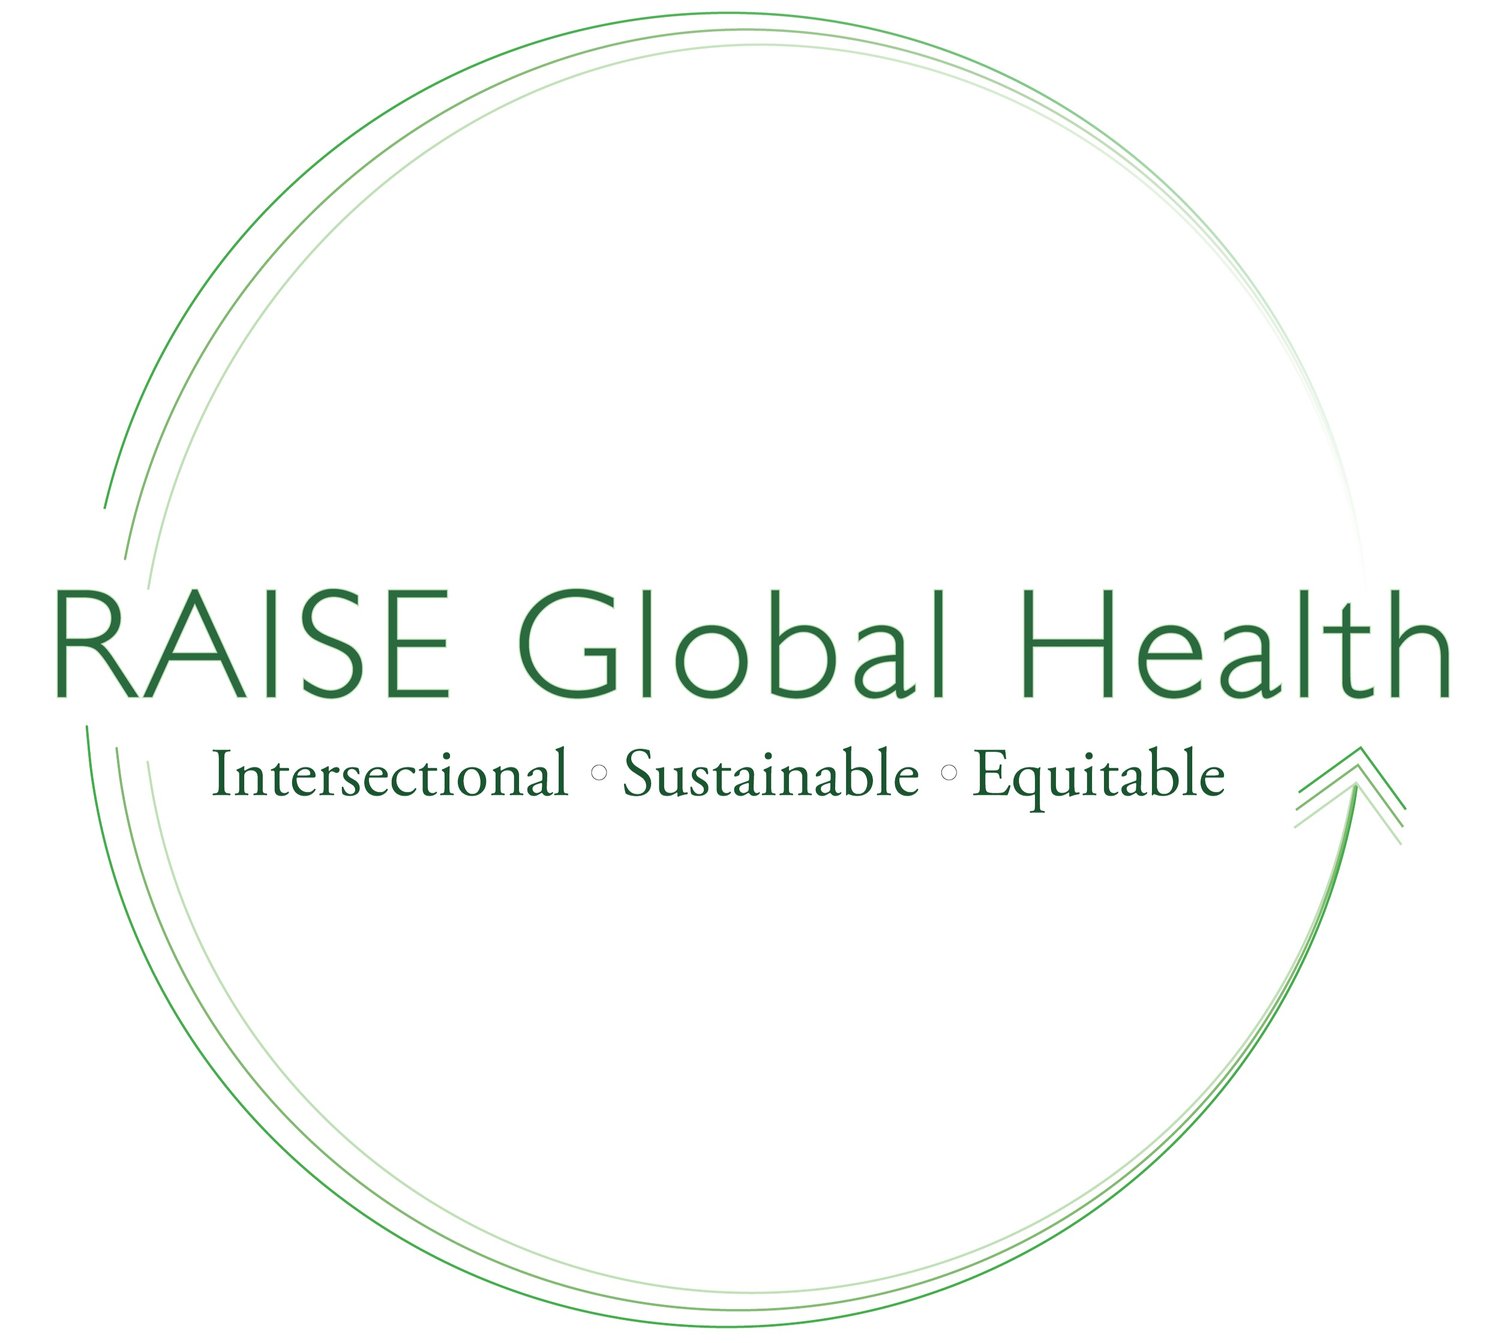 RAISE Global Health